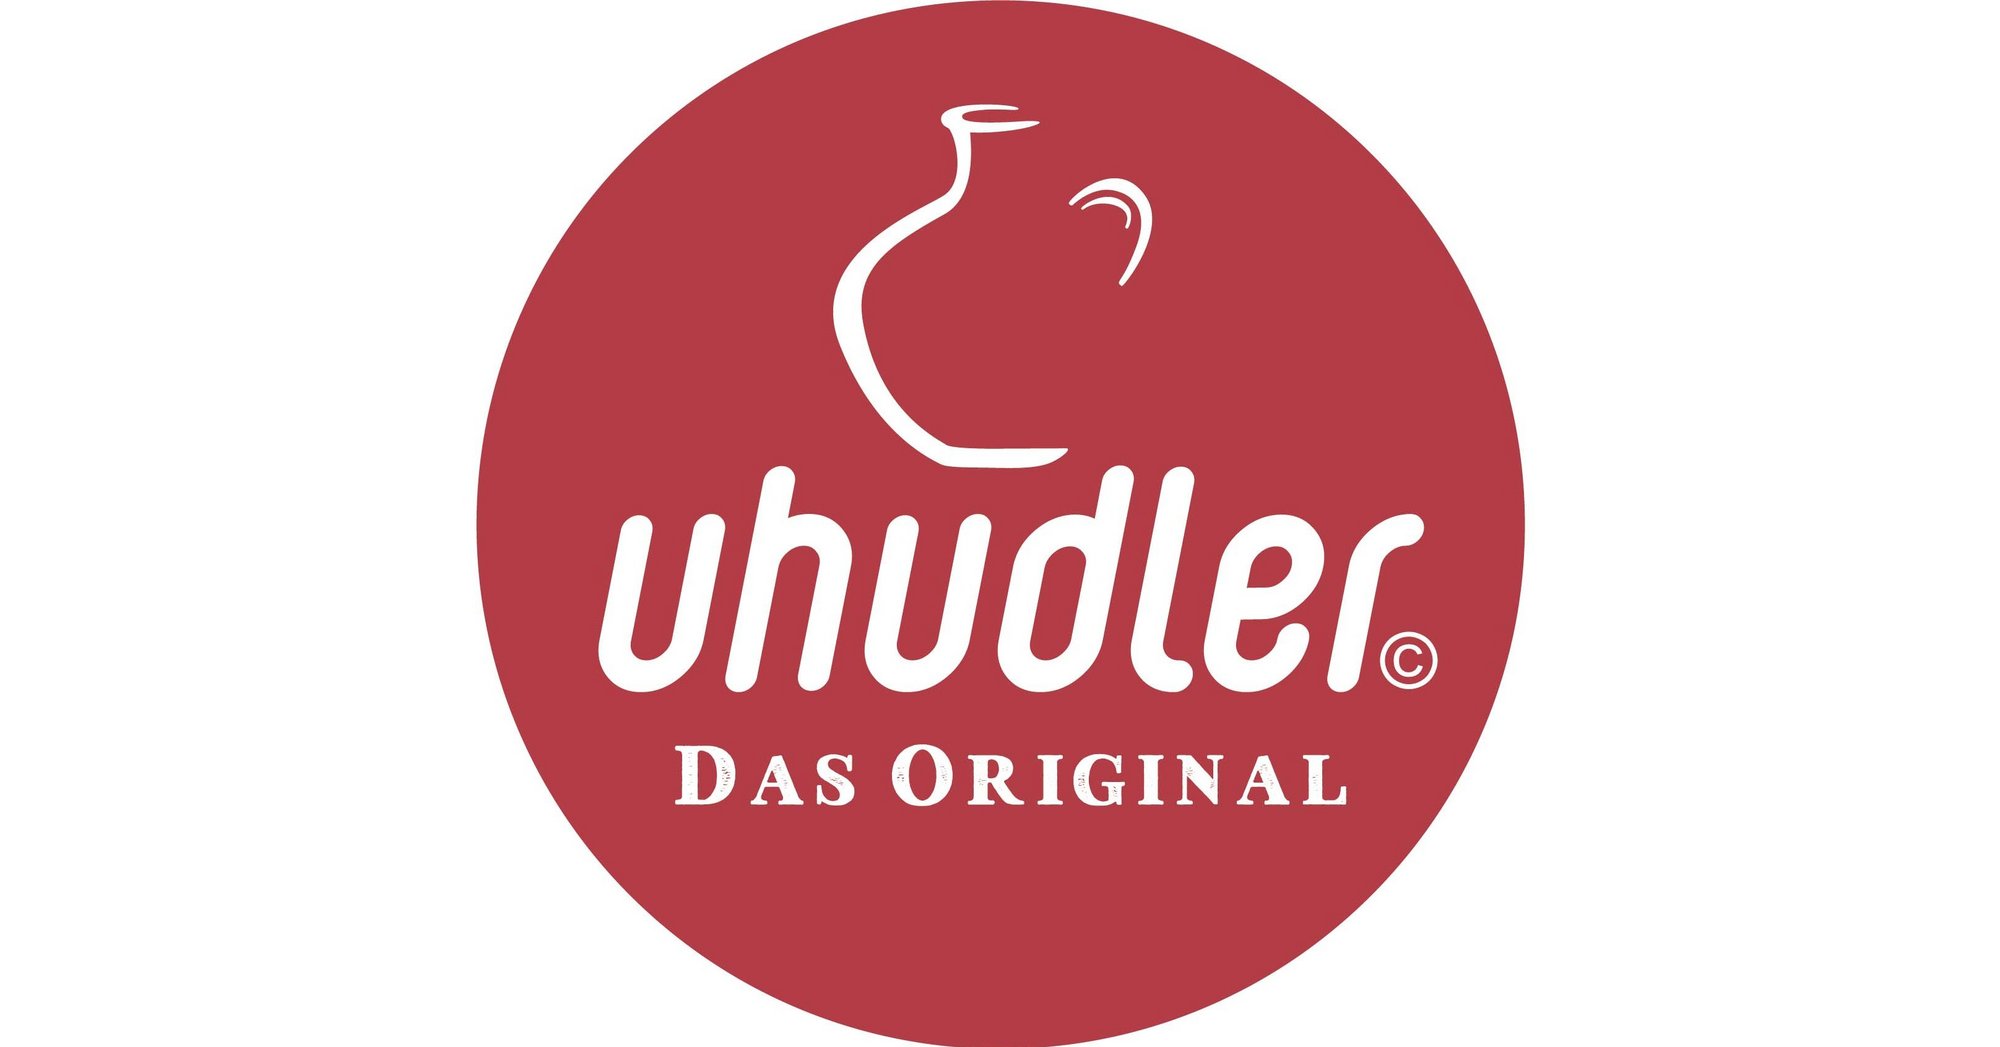 (c) Uhudlerverein.at